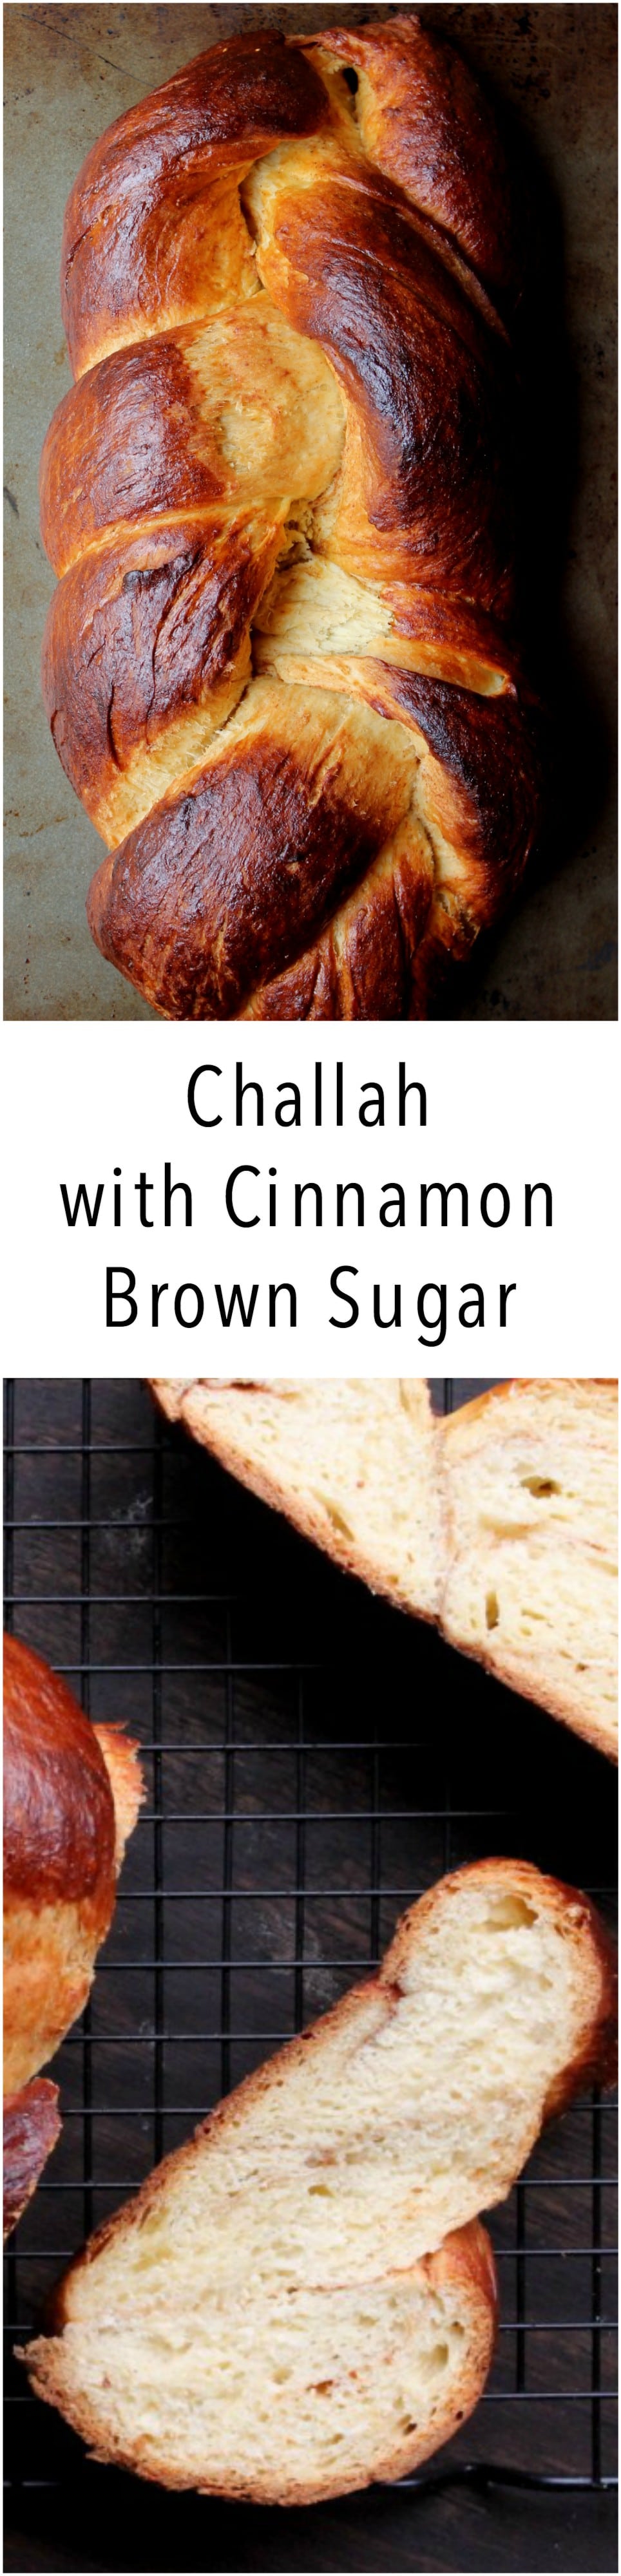 challah-with-cinnamon-brown-sugar.jpg